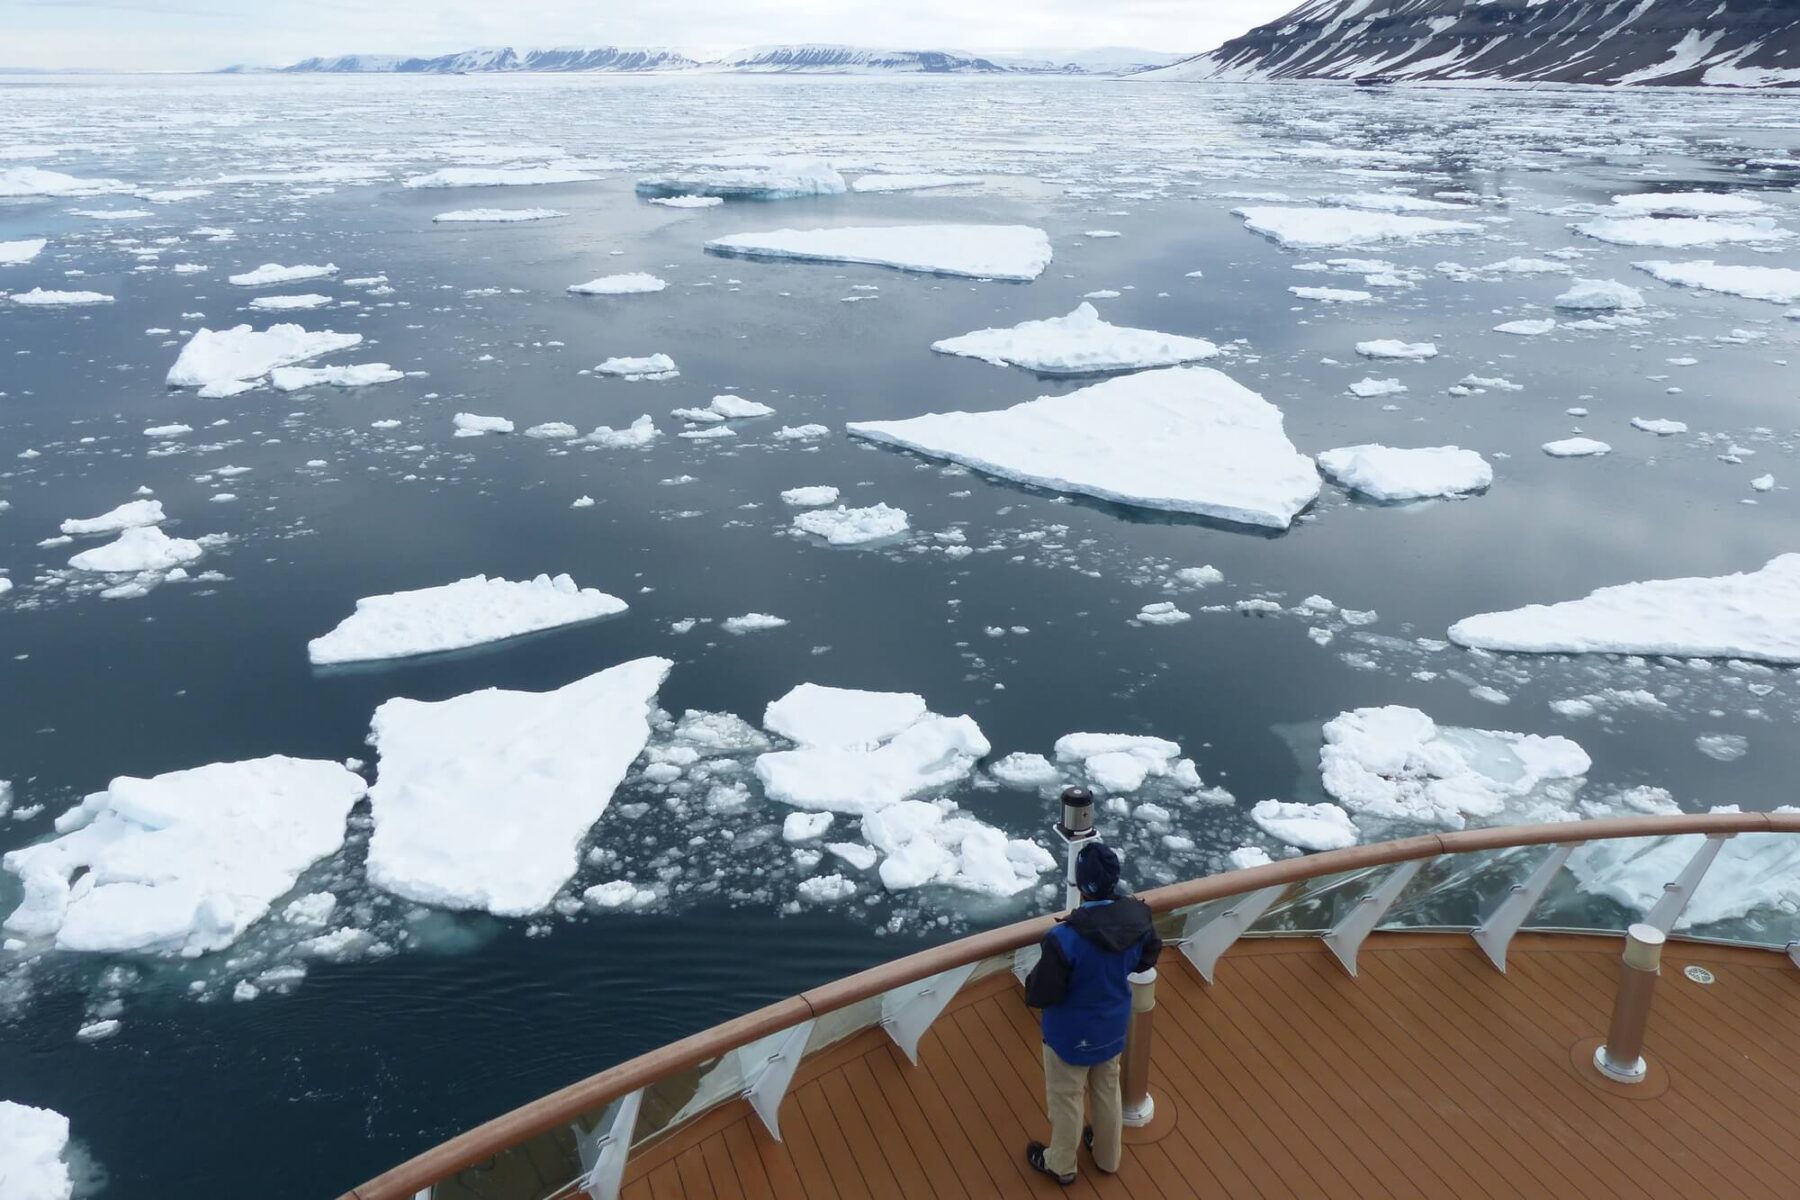 arctic-scenery-bow-of-ship-pf